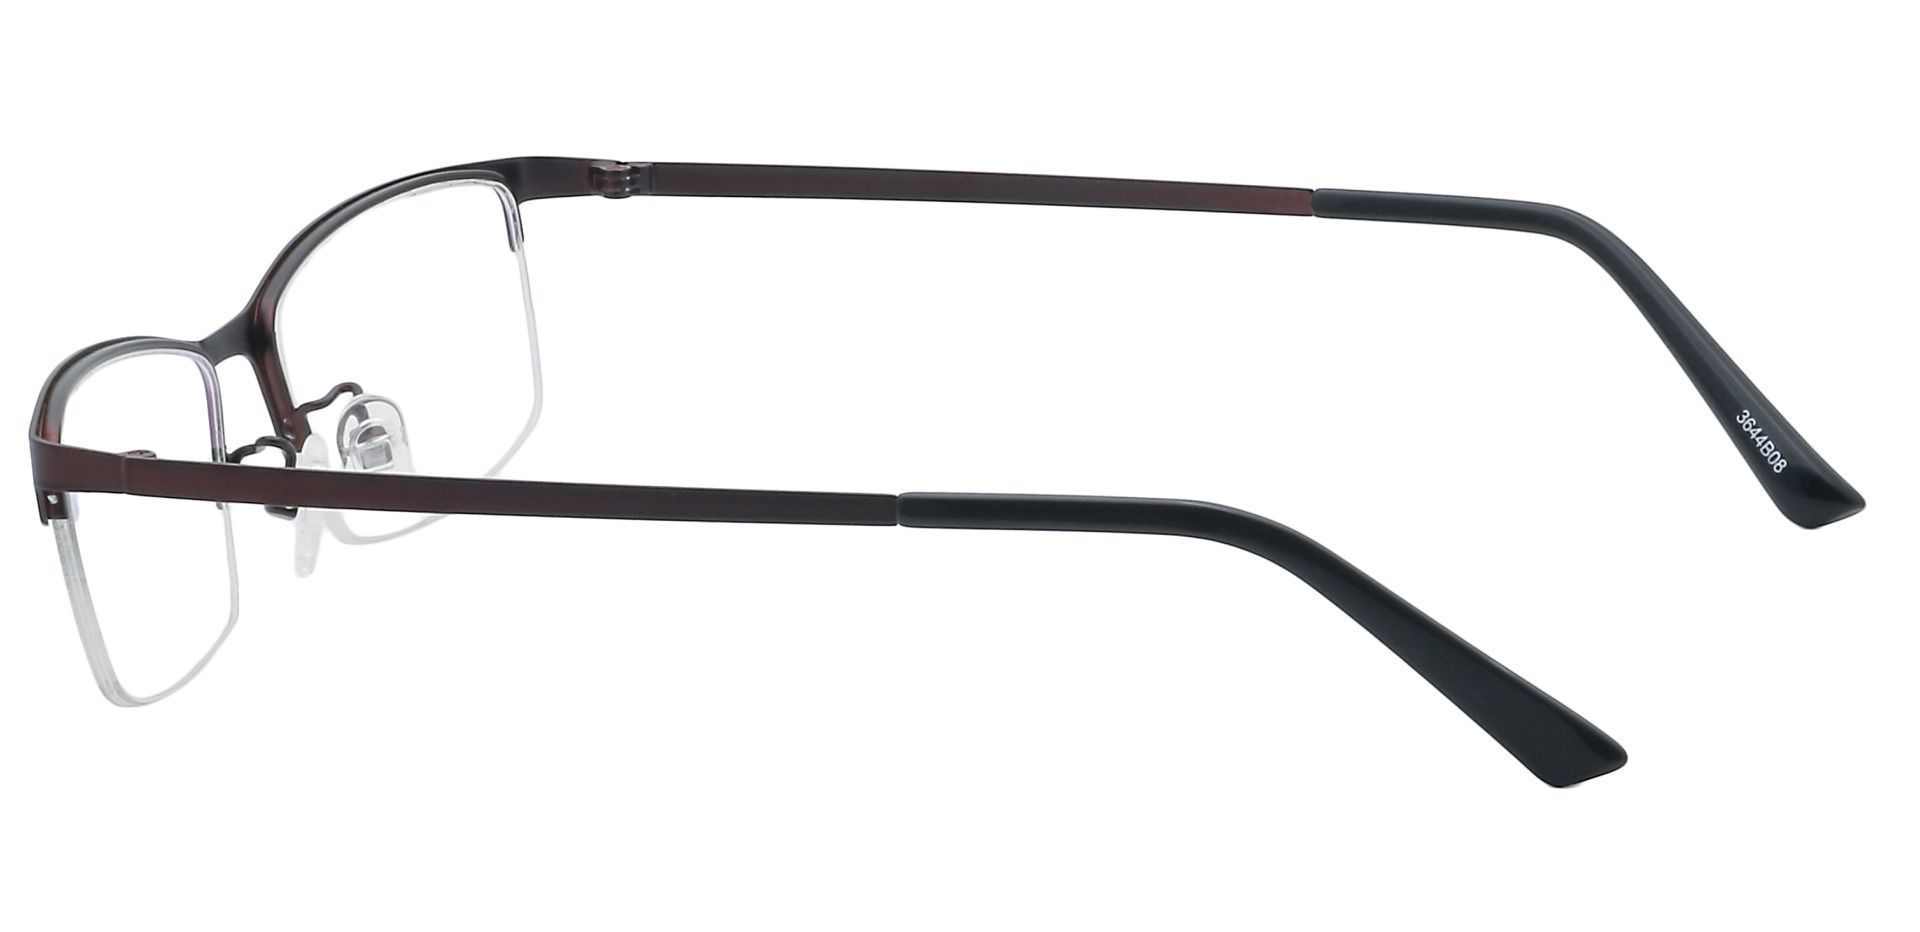 Parsley Rectangle Eyeglasses Frame - Brown